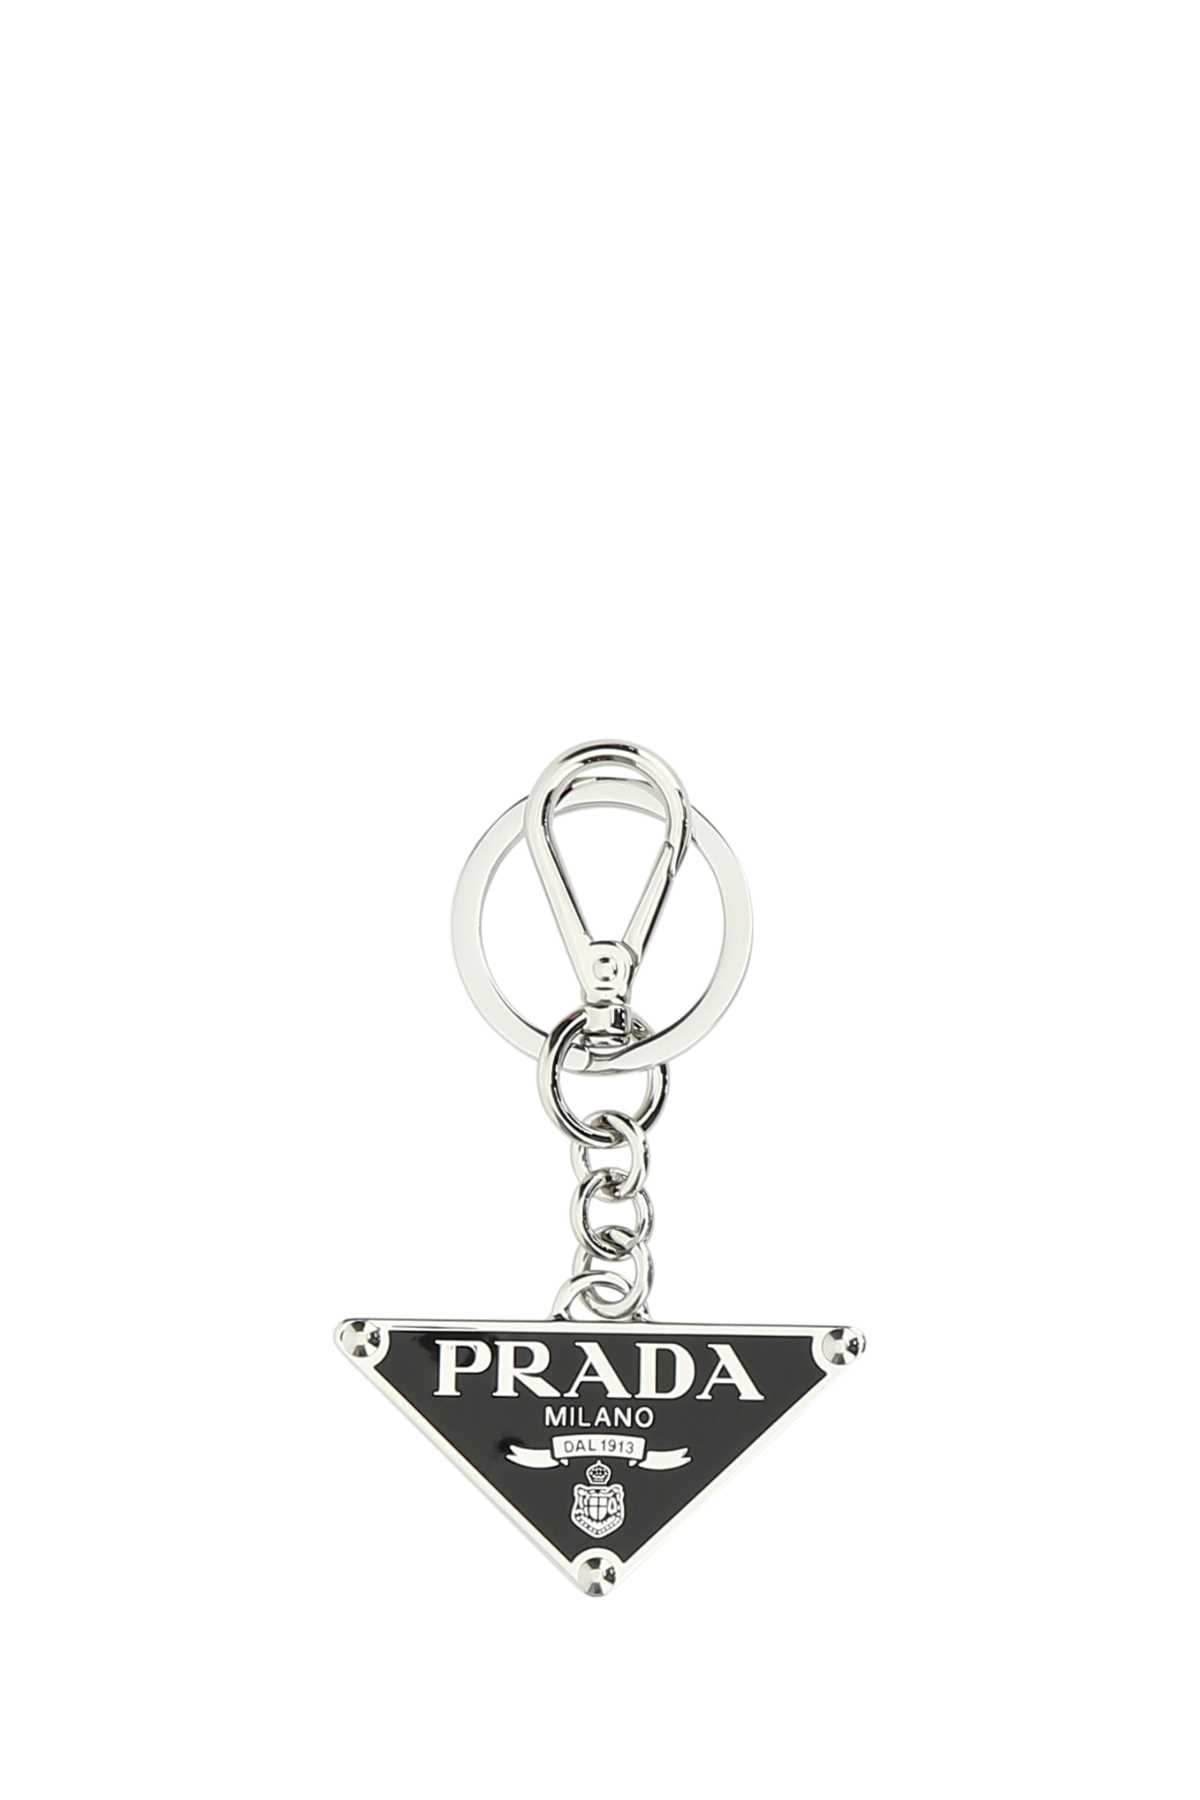 Prada Black Metal Key Ring In F0002